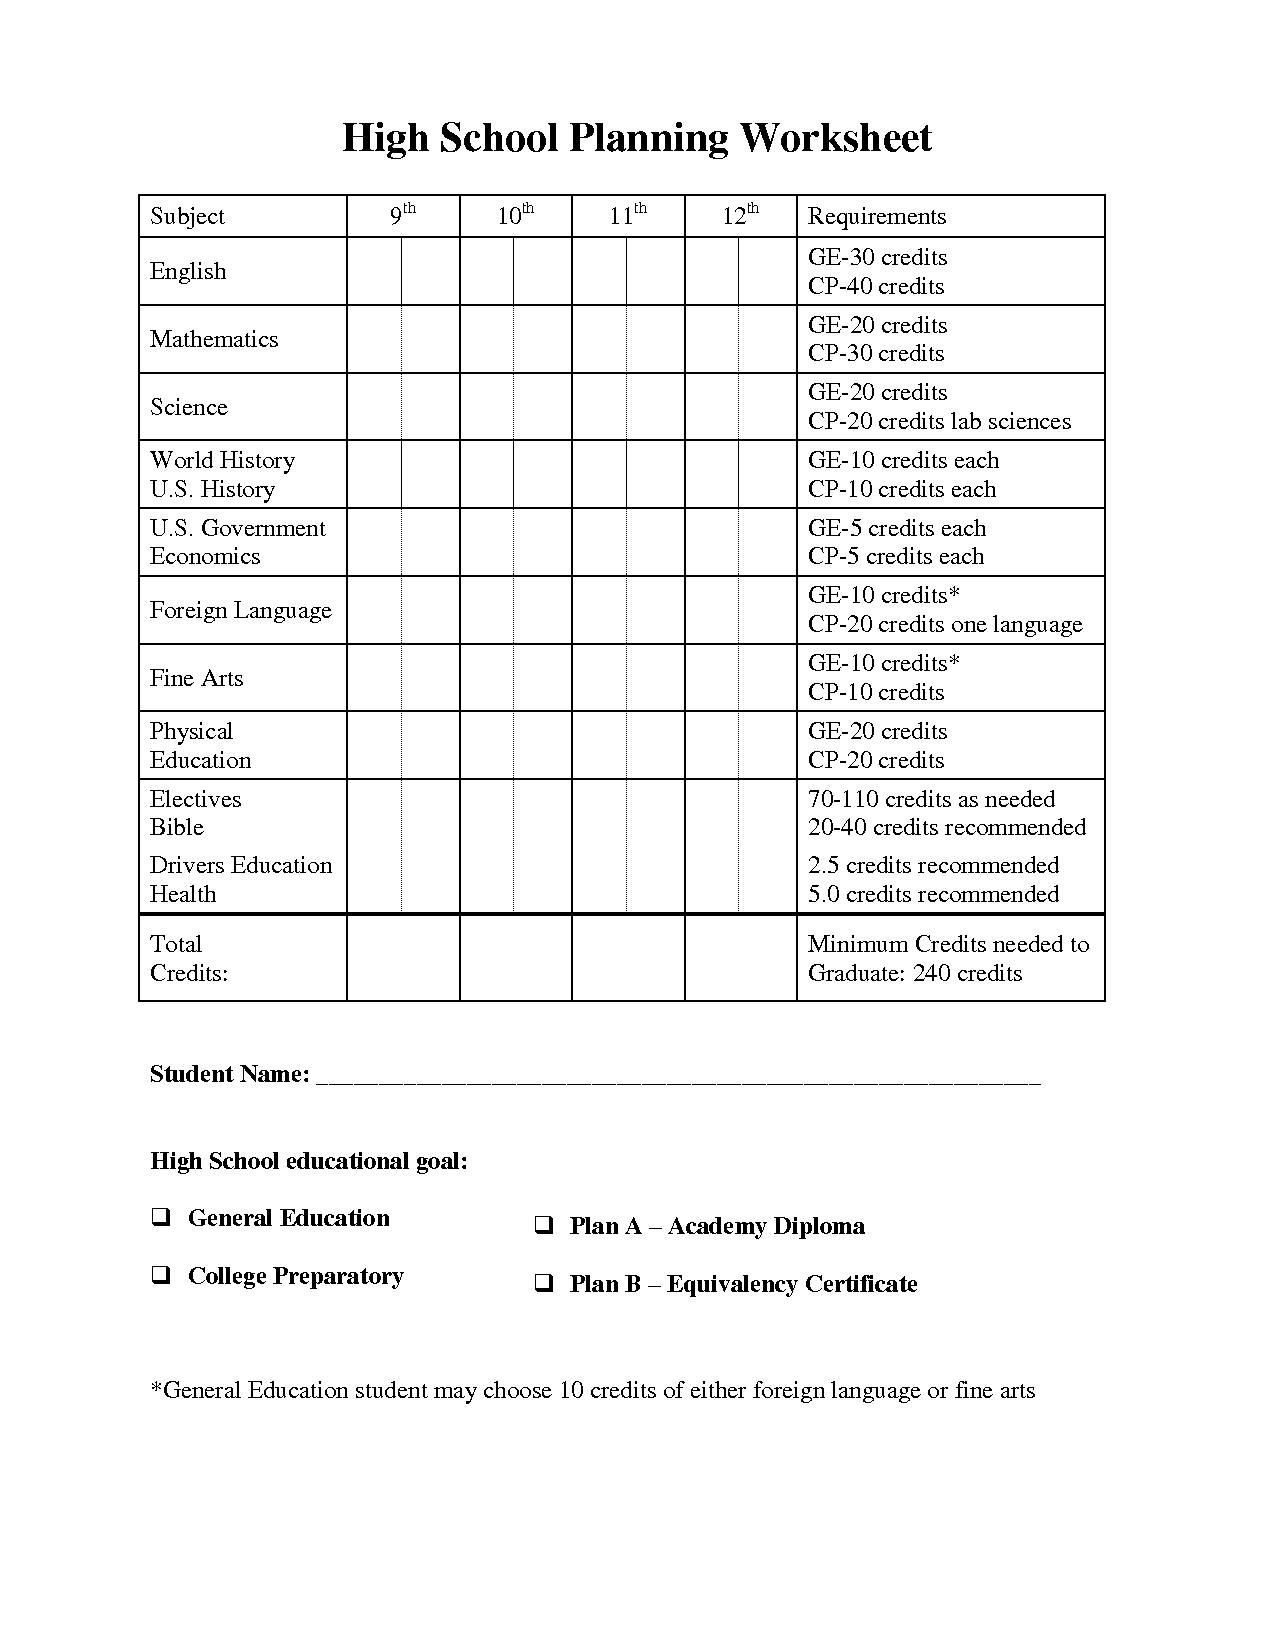 High School Planning Worksheet Image